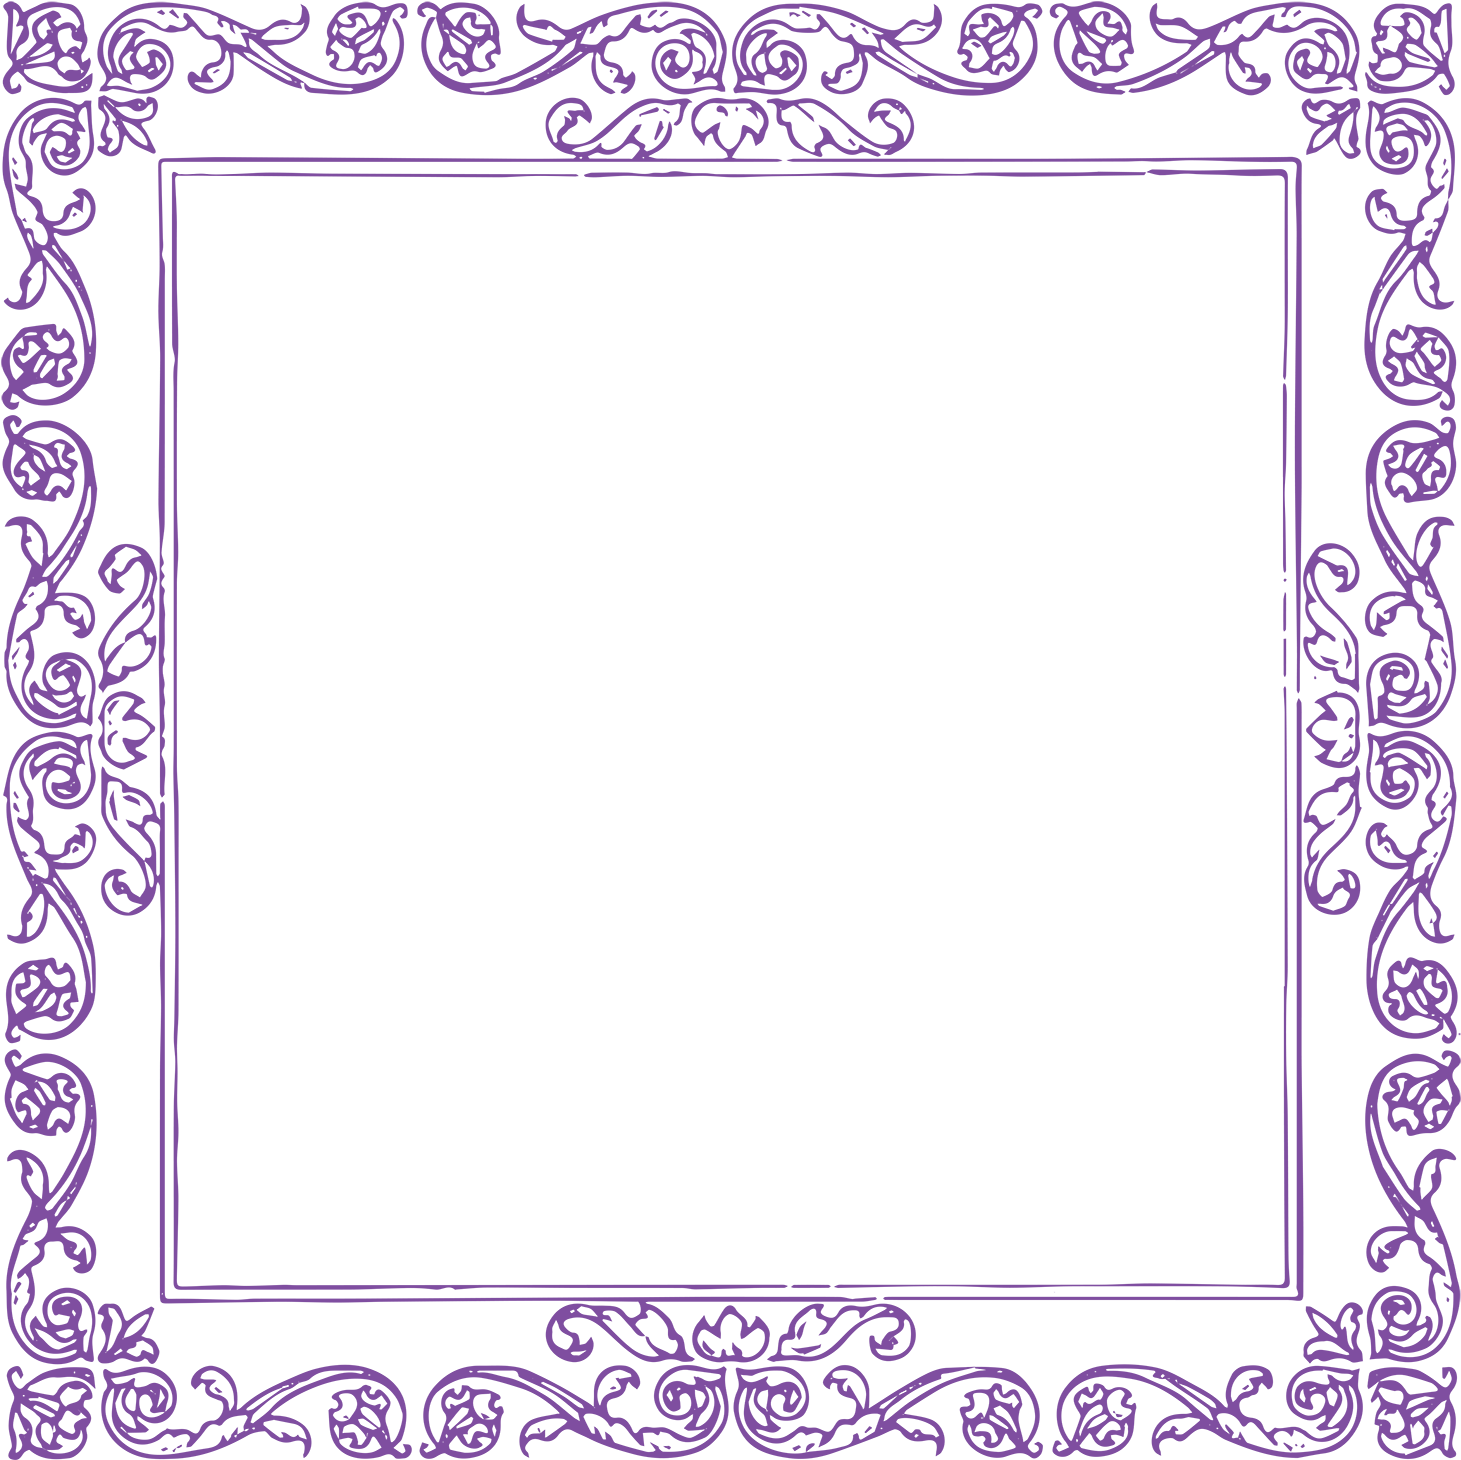 A Purple And Black Frame